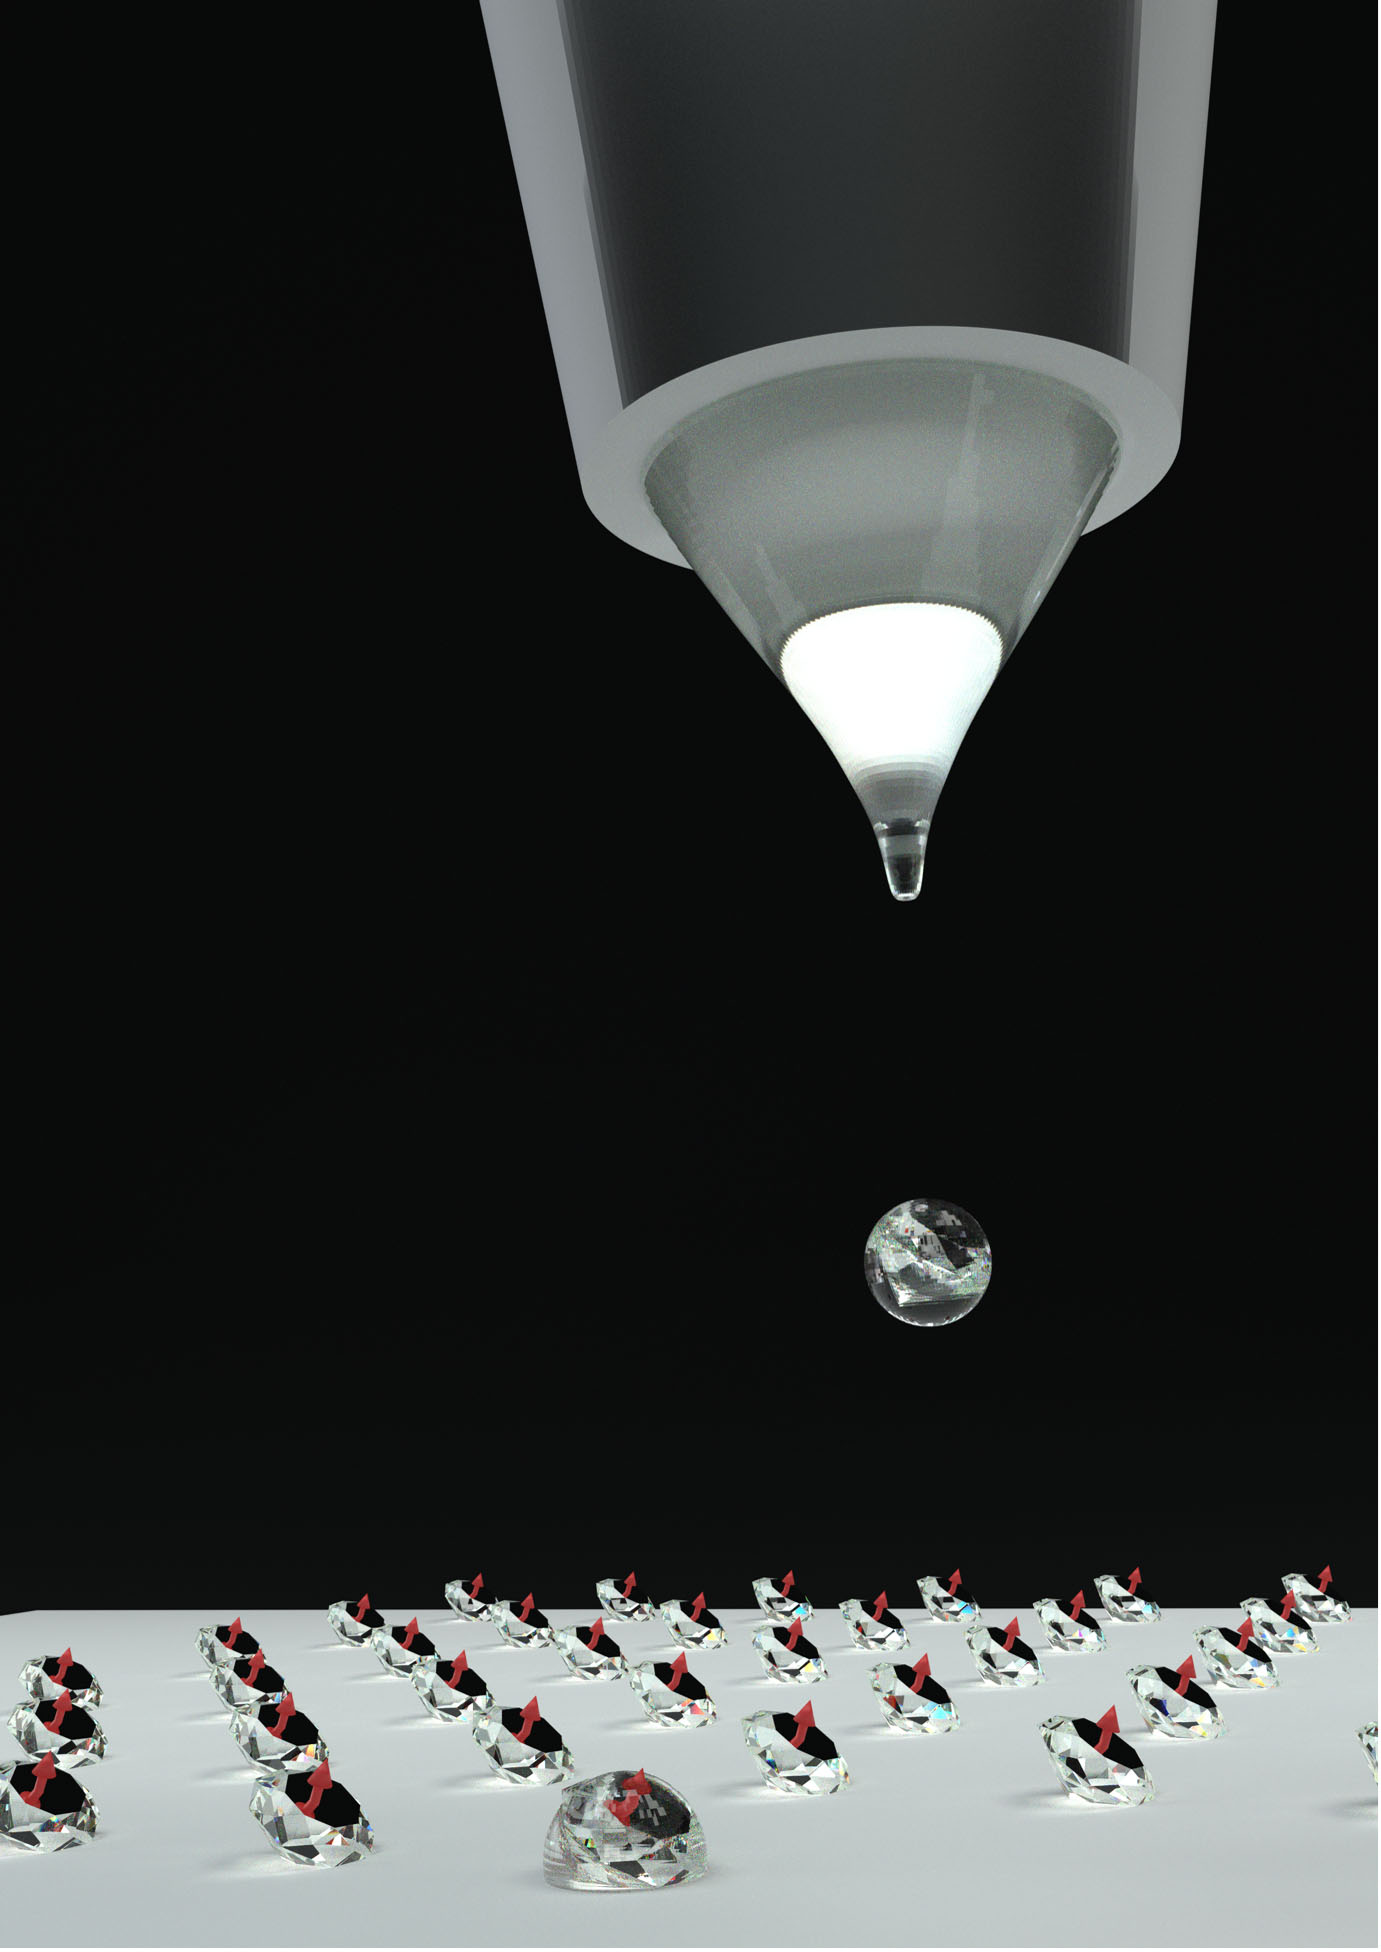 Nano-precision printing of NV-center nanodiamonds using the new technology